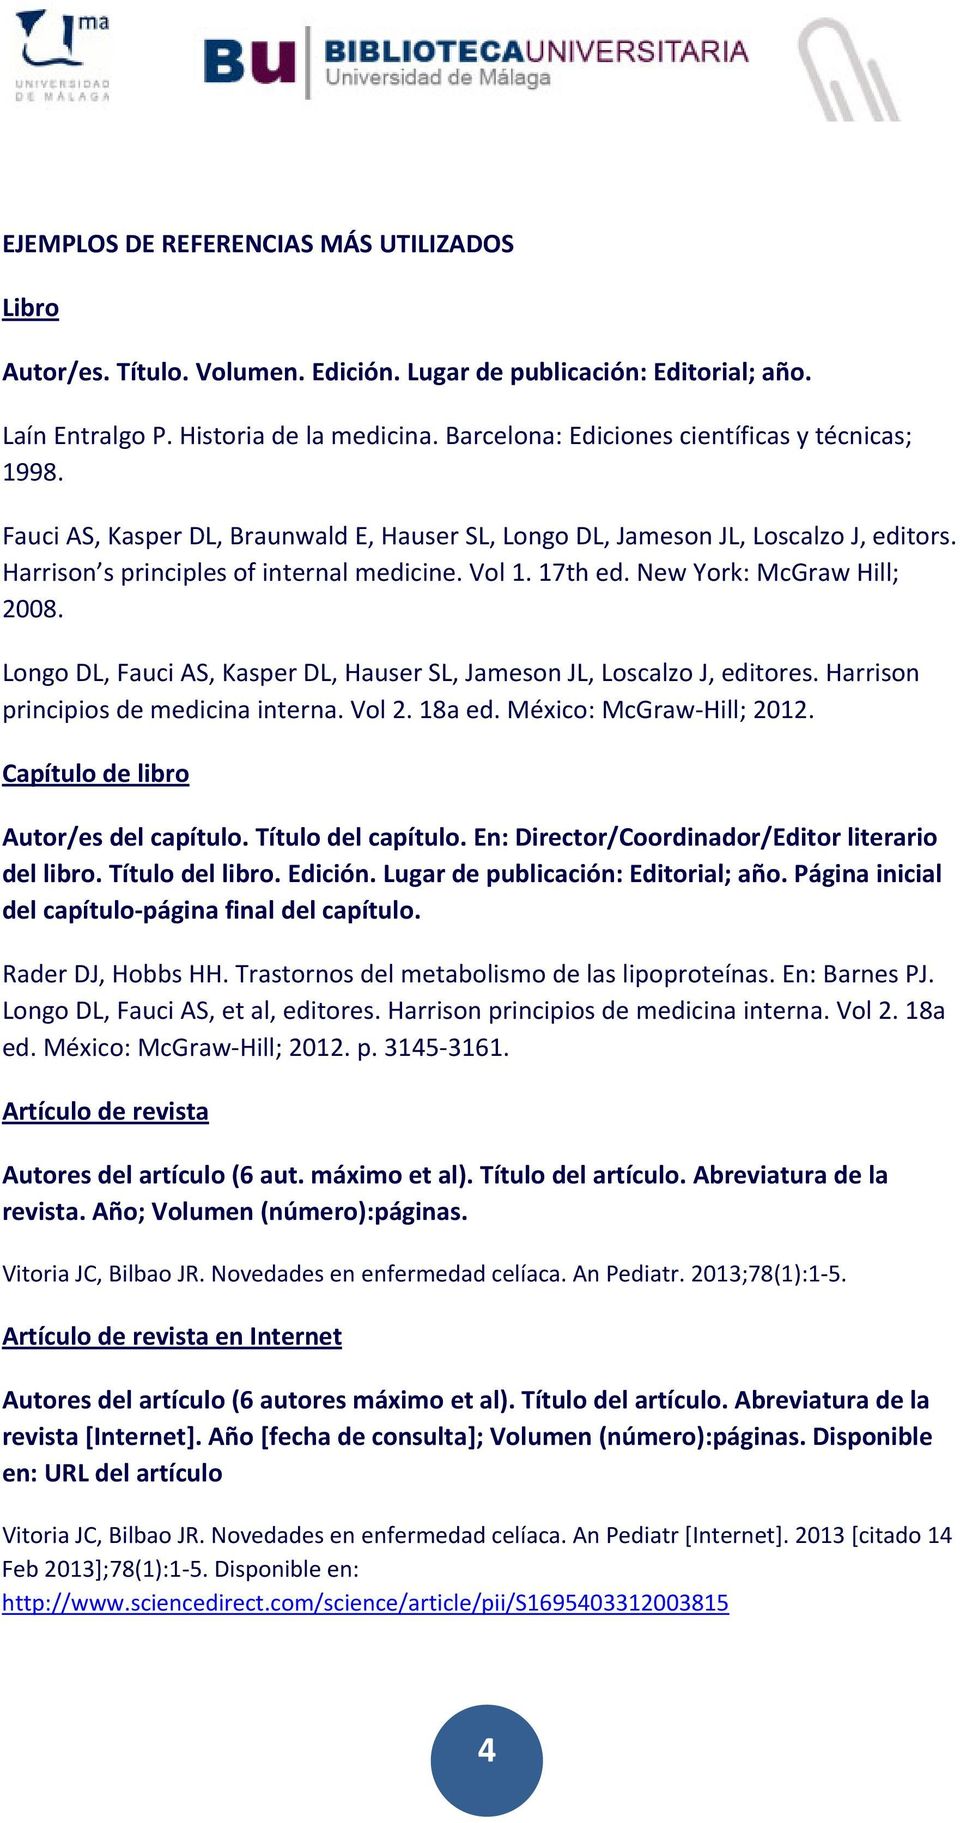 New York: McGraw Hill; 2008. Longo DL, Fauci AS, Kasper DL, Hauser SL, Jameson JL, Loscalzo J, editores. Harrison principios de medicina interna. Vol 2. 18a ed. México: McGraw Hill; 2012.